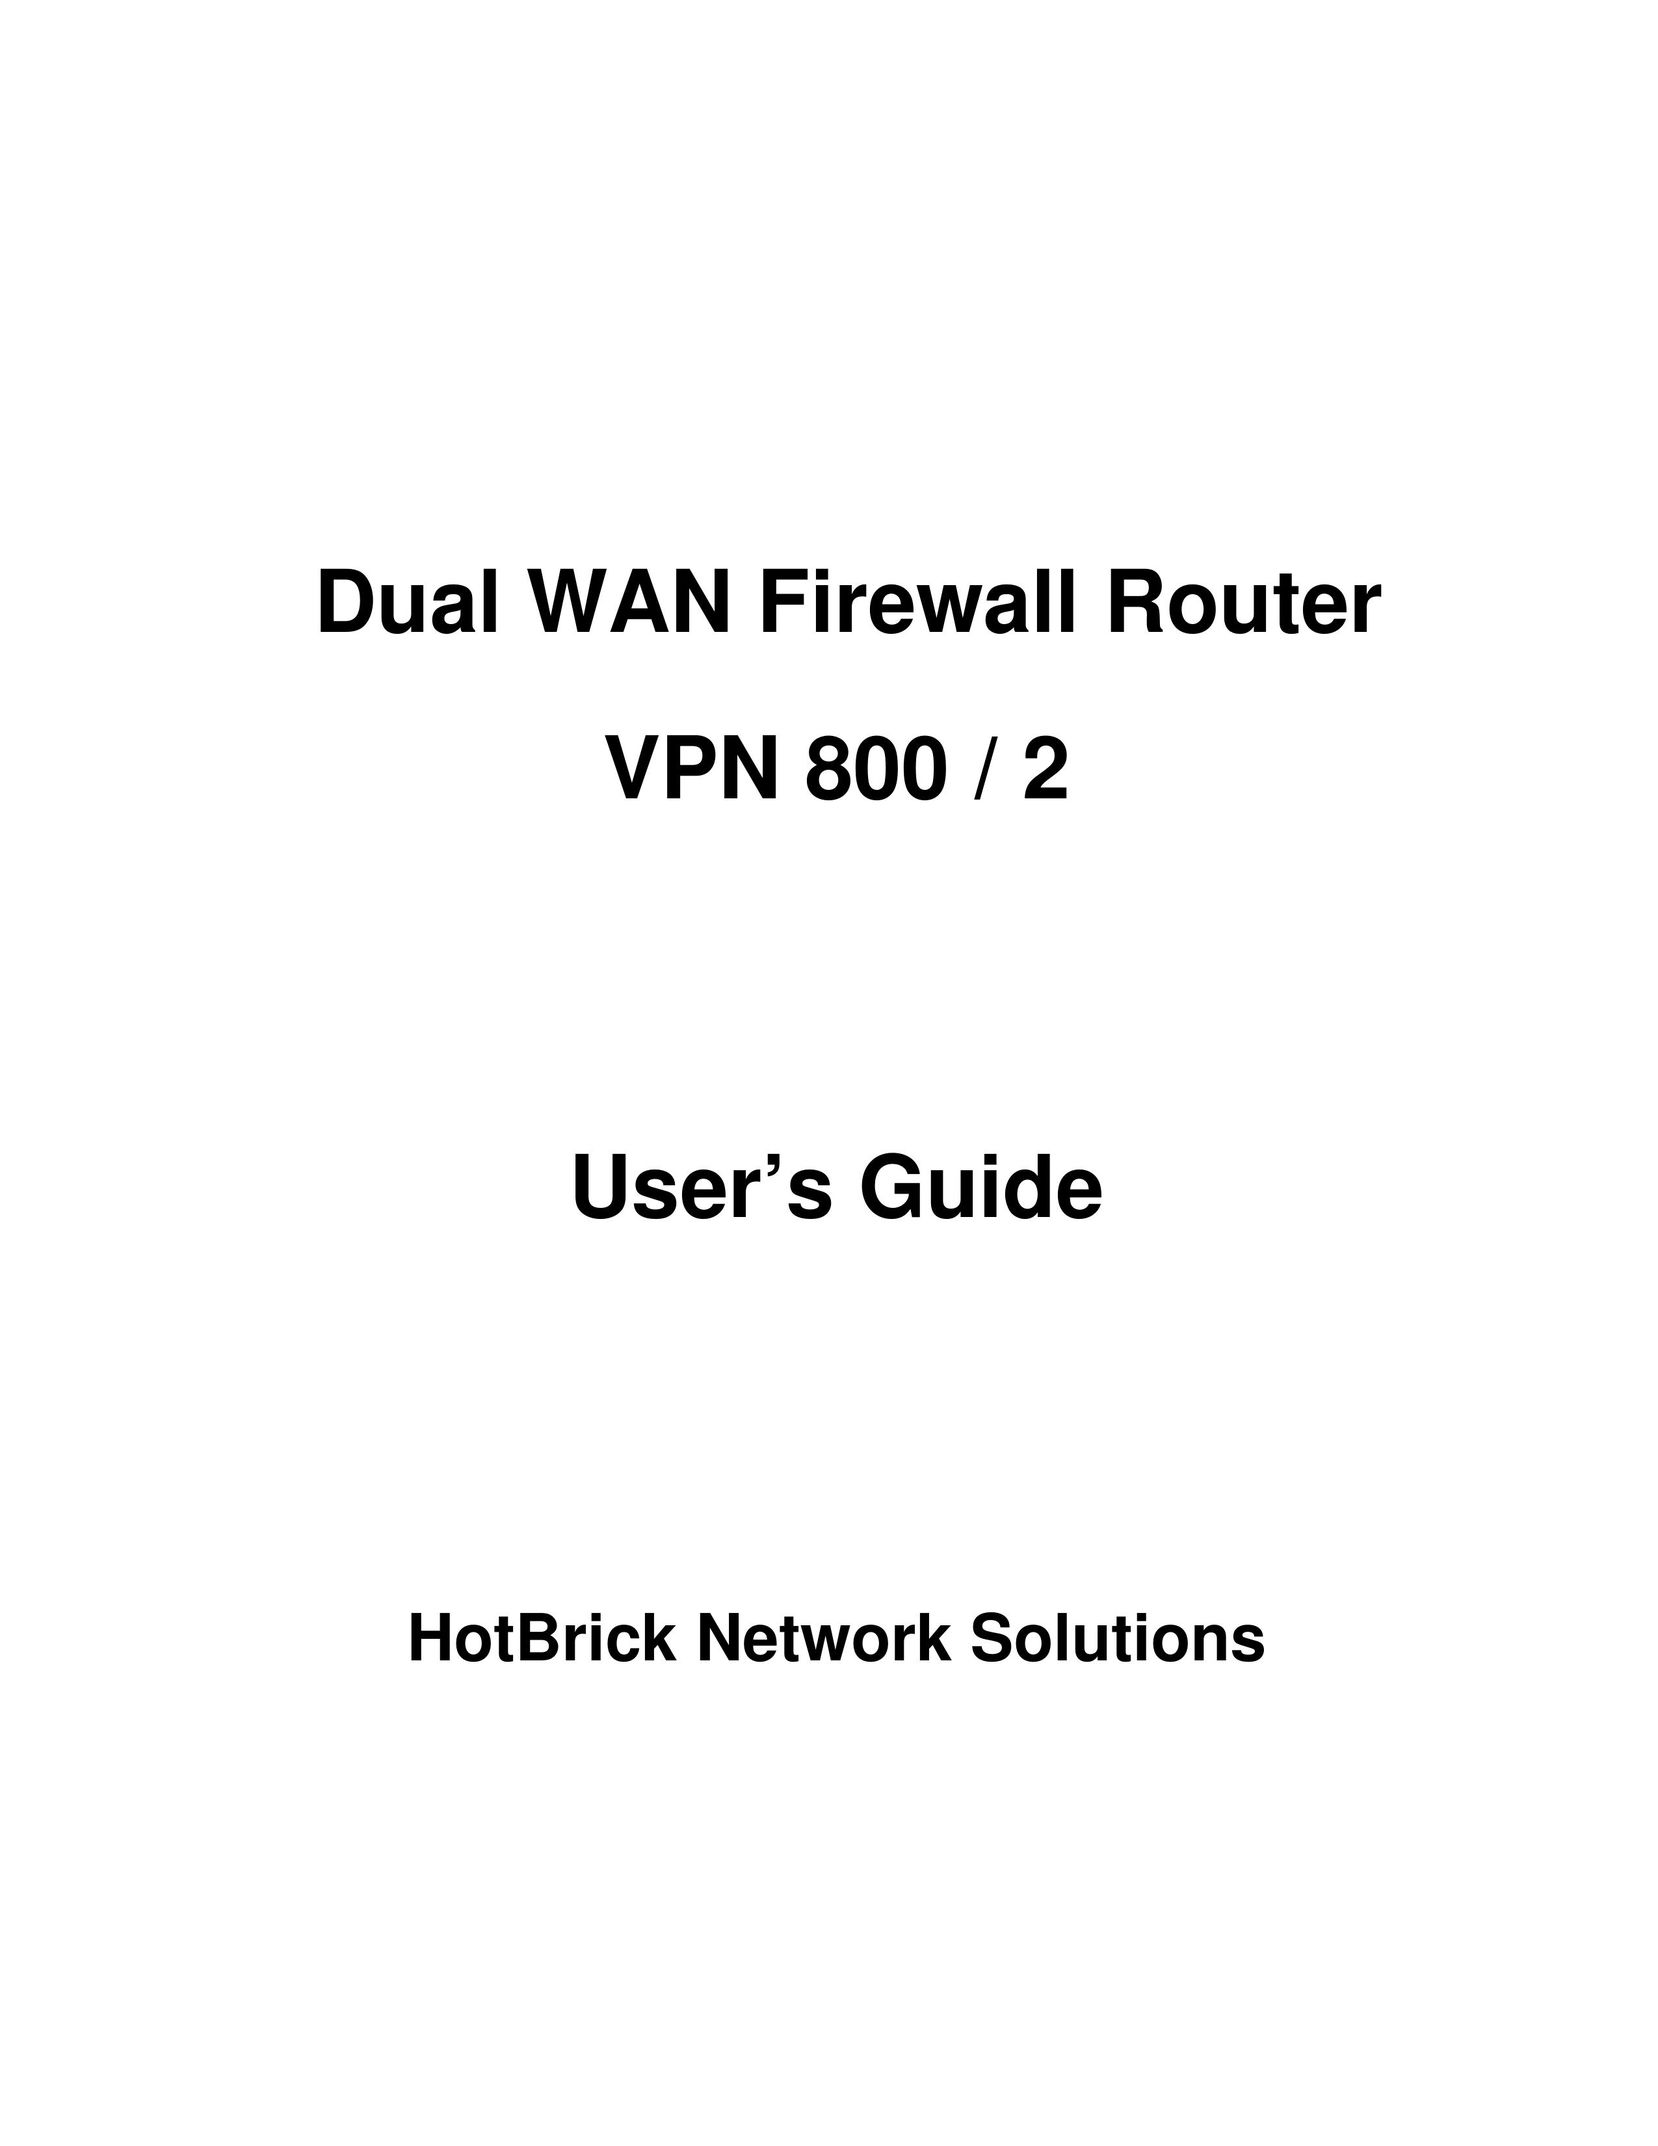 HotBrick VPN 800/2 Network Router User Manual